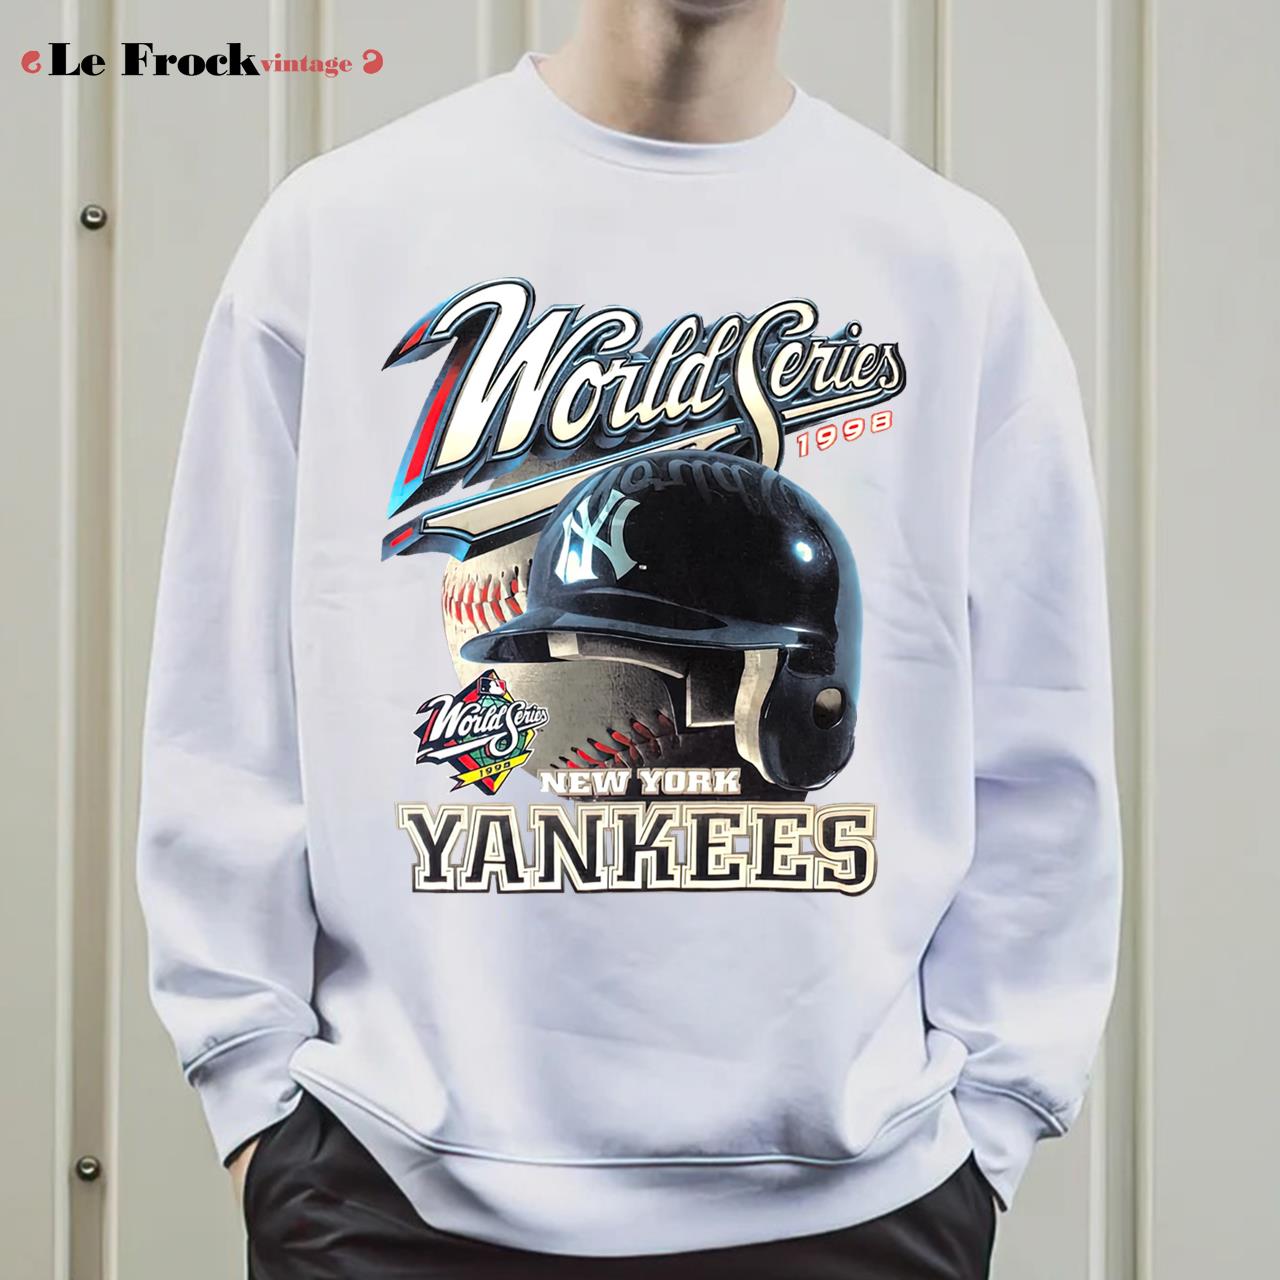 MLB New York Yankees 1998 World Series Yankees T-Shirt Vintage Graphic Tee